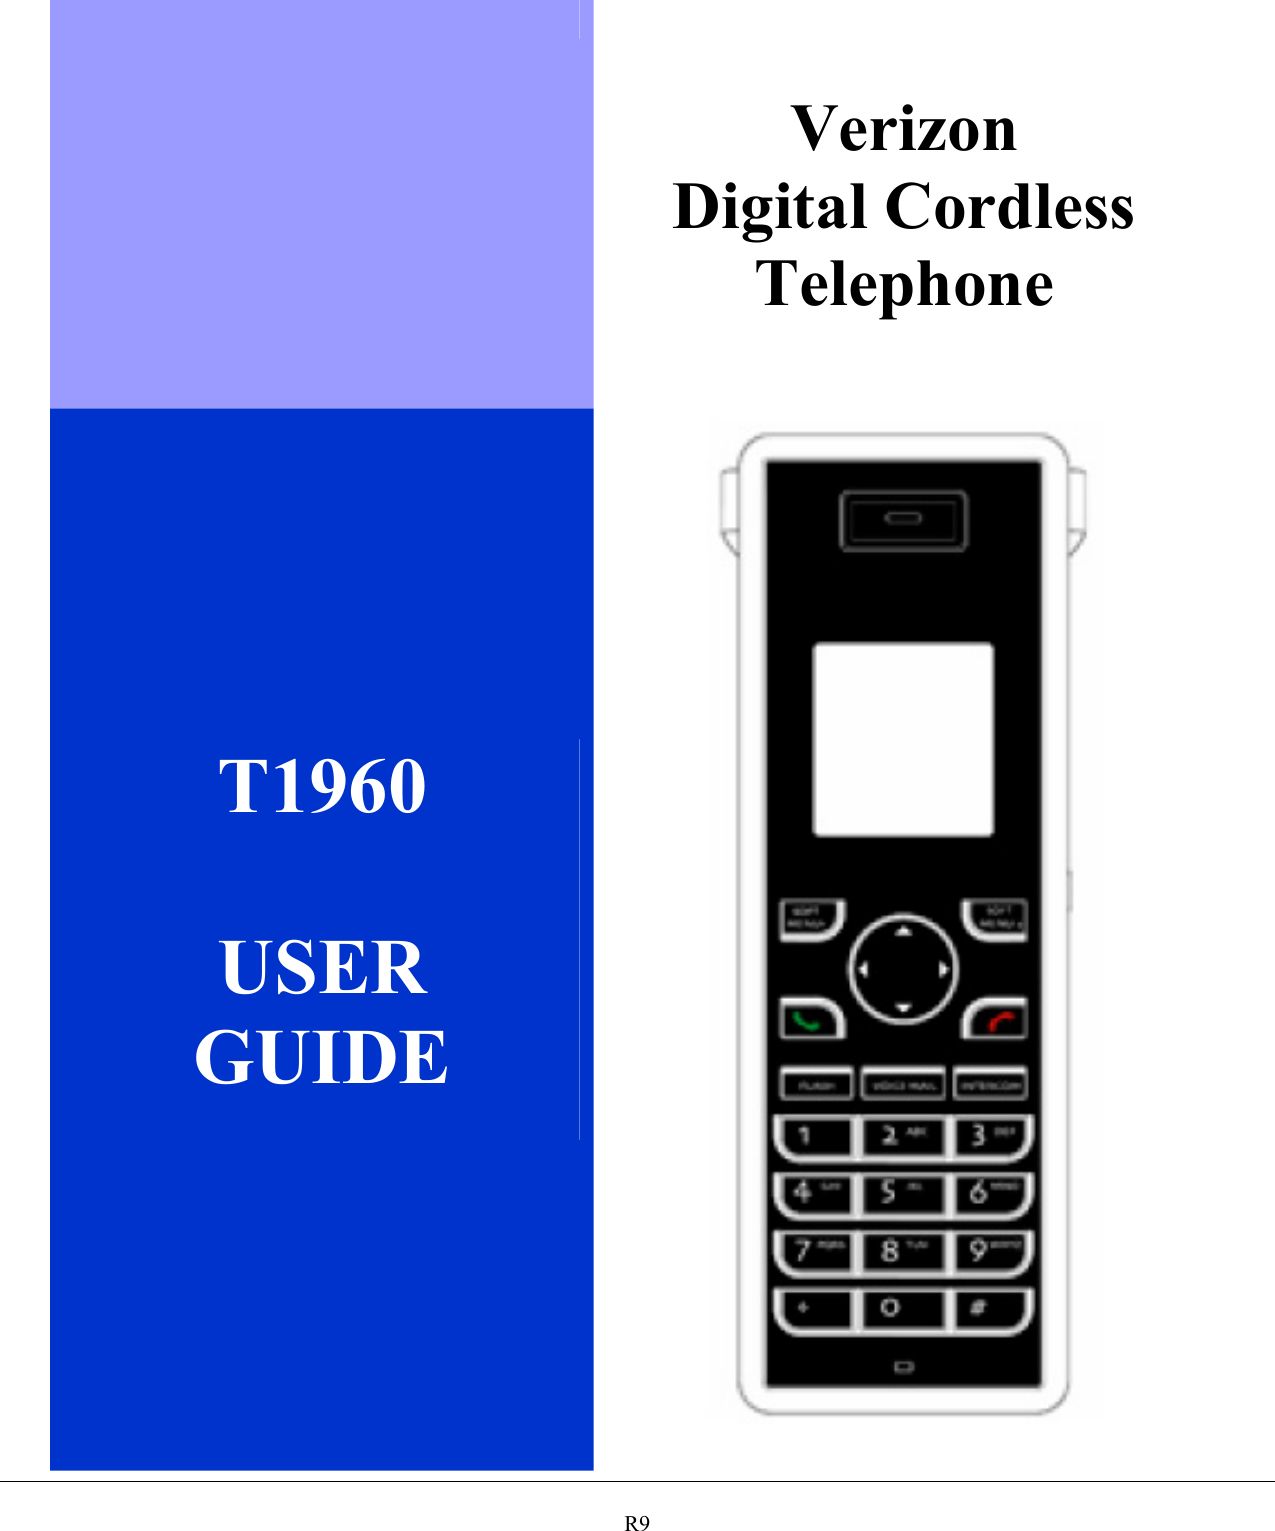   R9 Verizon Digital Cordless Telephone T1960  USER GUIDE   